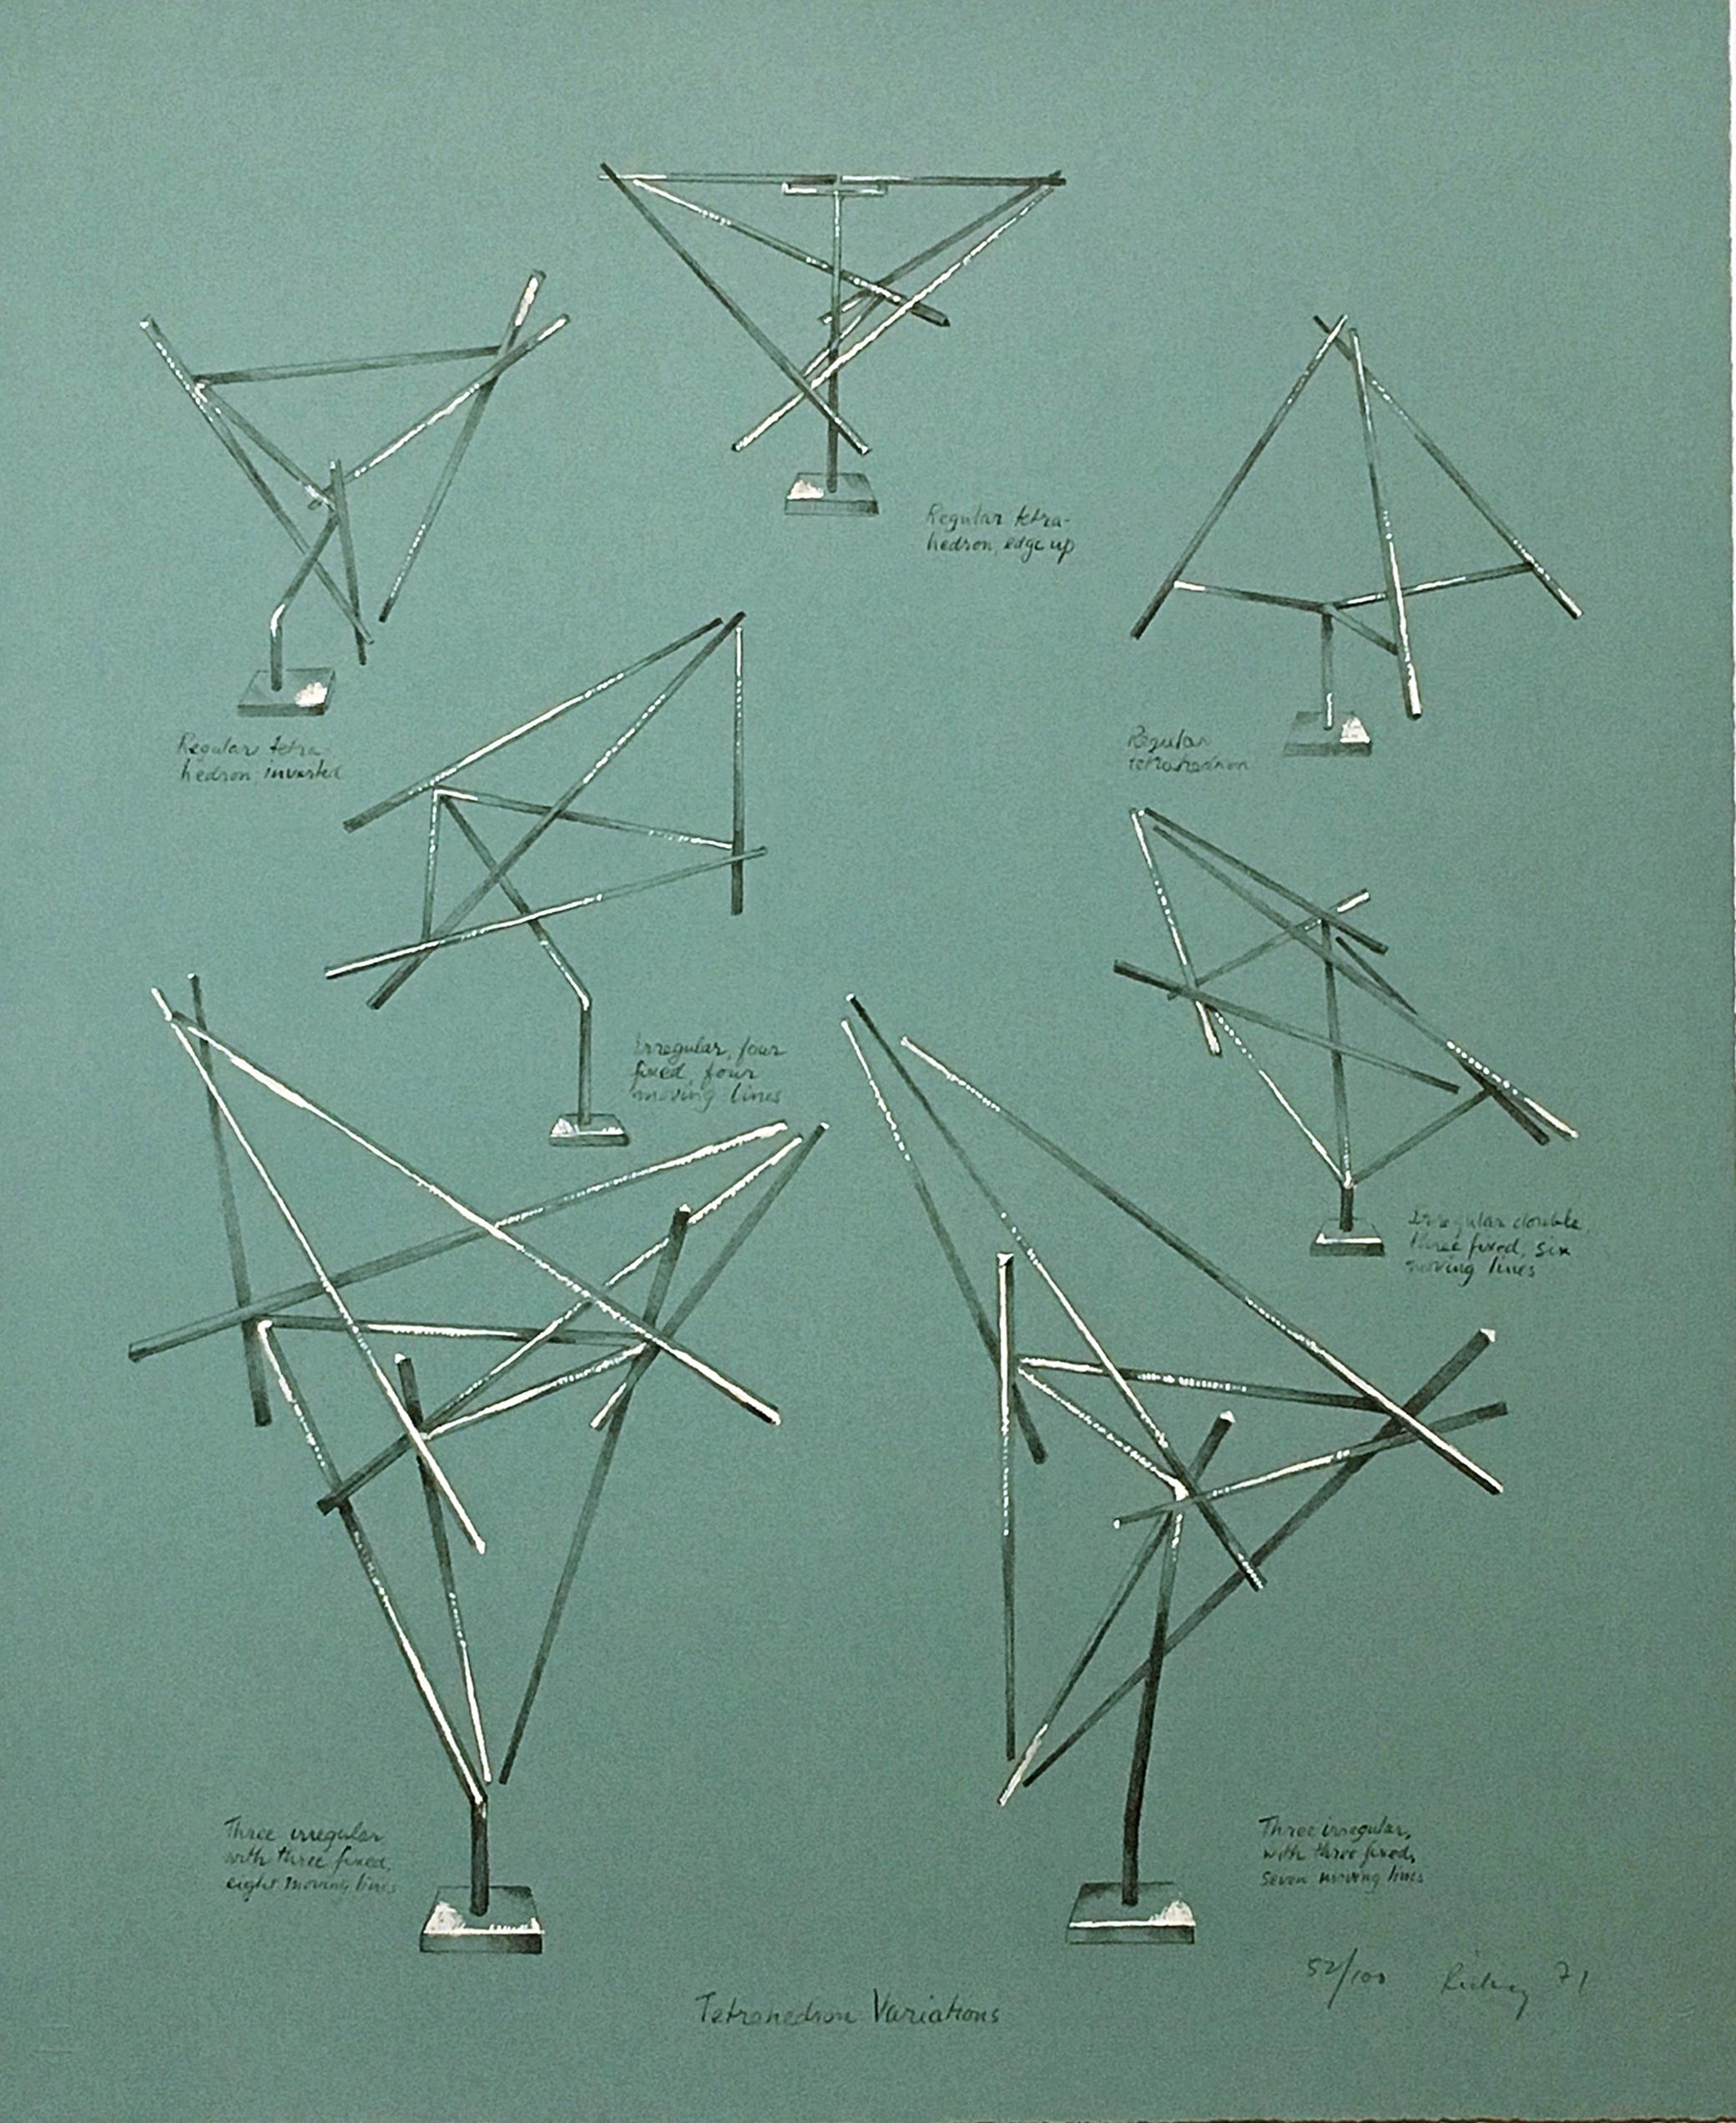 Tetrahedron-Variationen (86, Verlag Marburg)